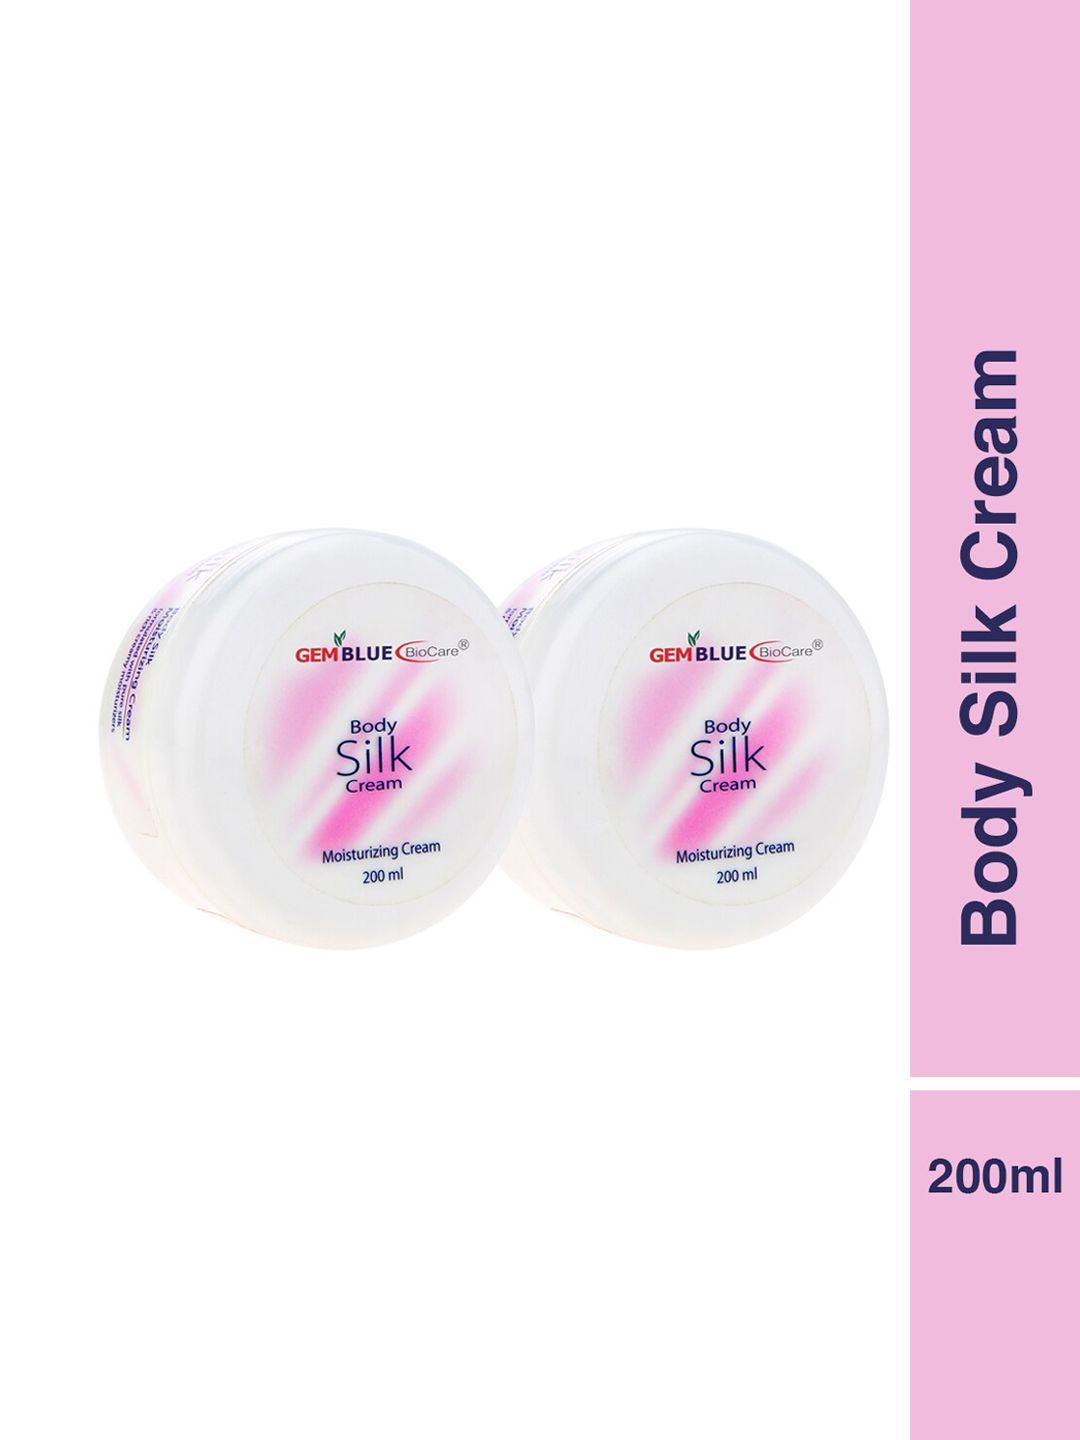 gemblue biocare pack of 2 body silk cream - 200 ml each